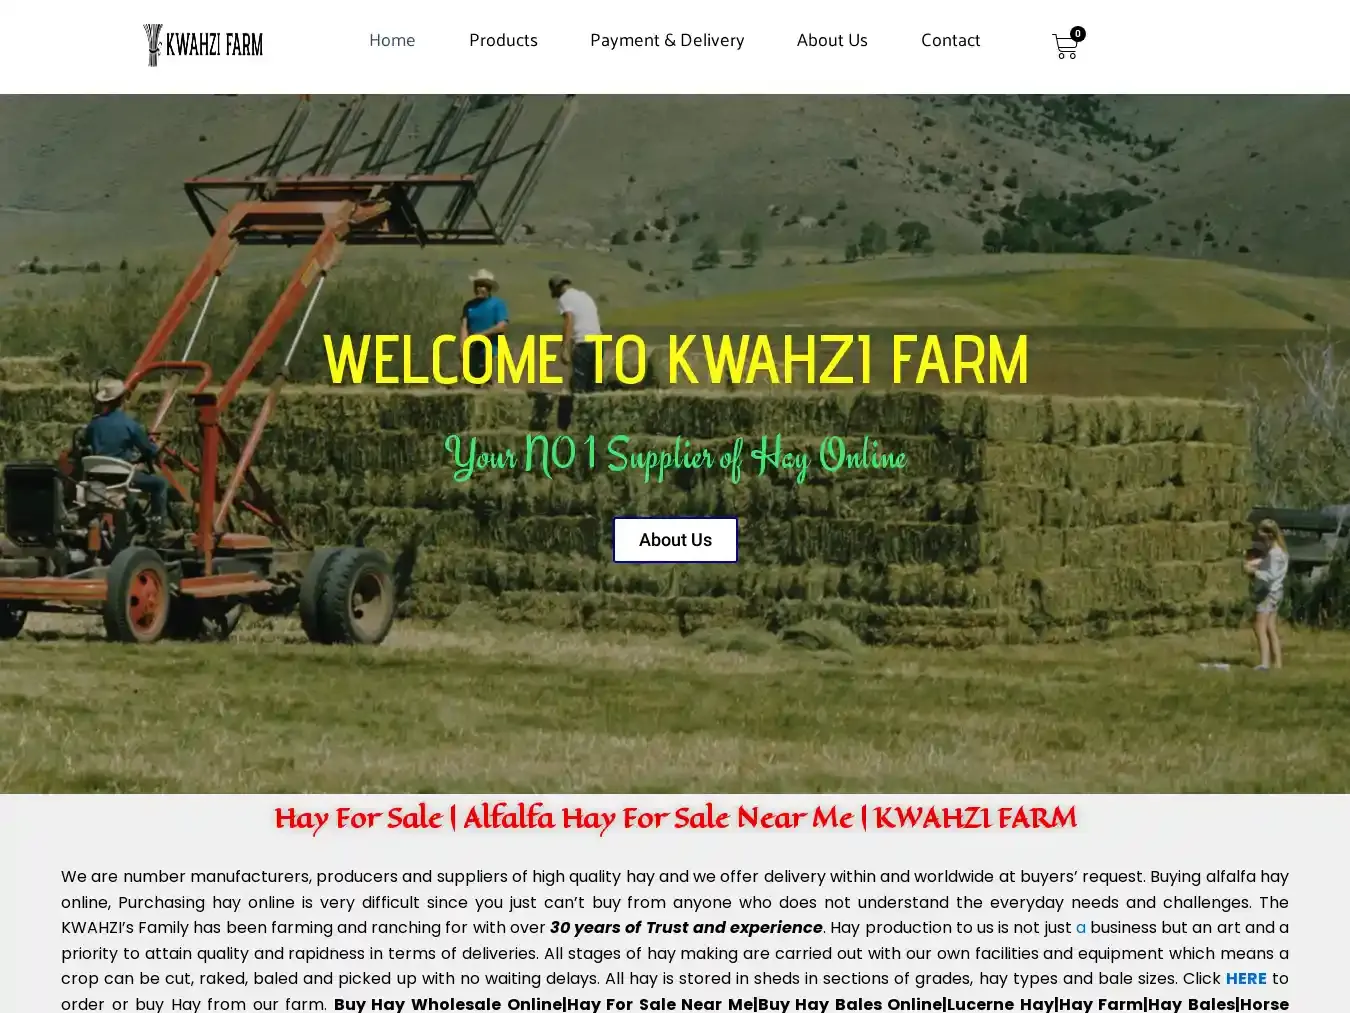 Kwahzifarm.com Fraudulent Non-Delivery website.